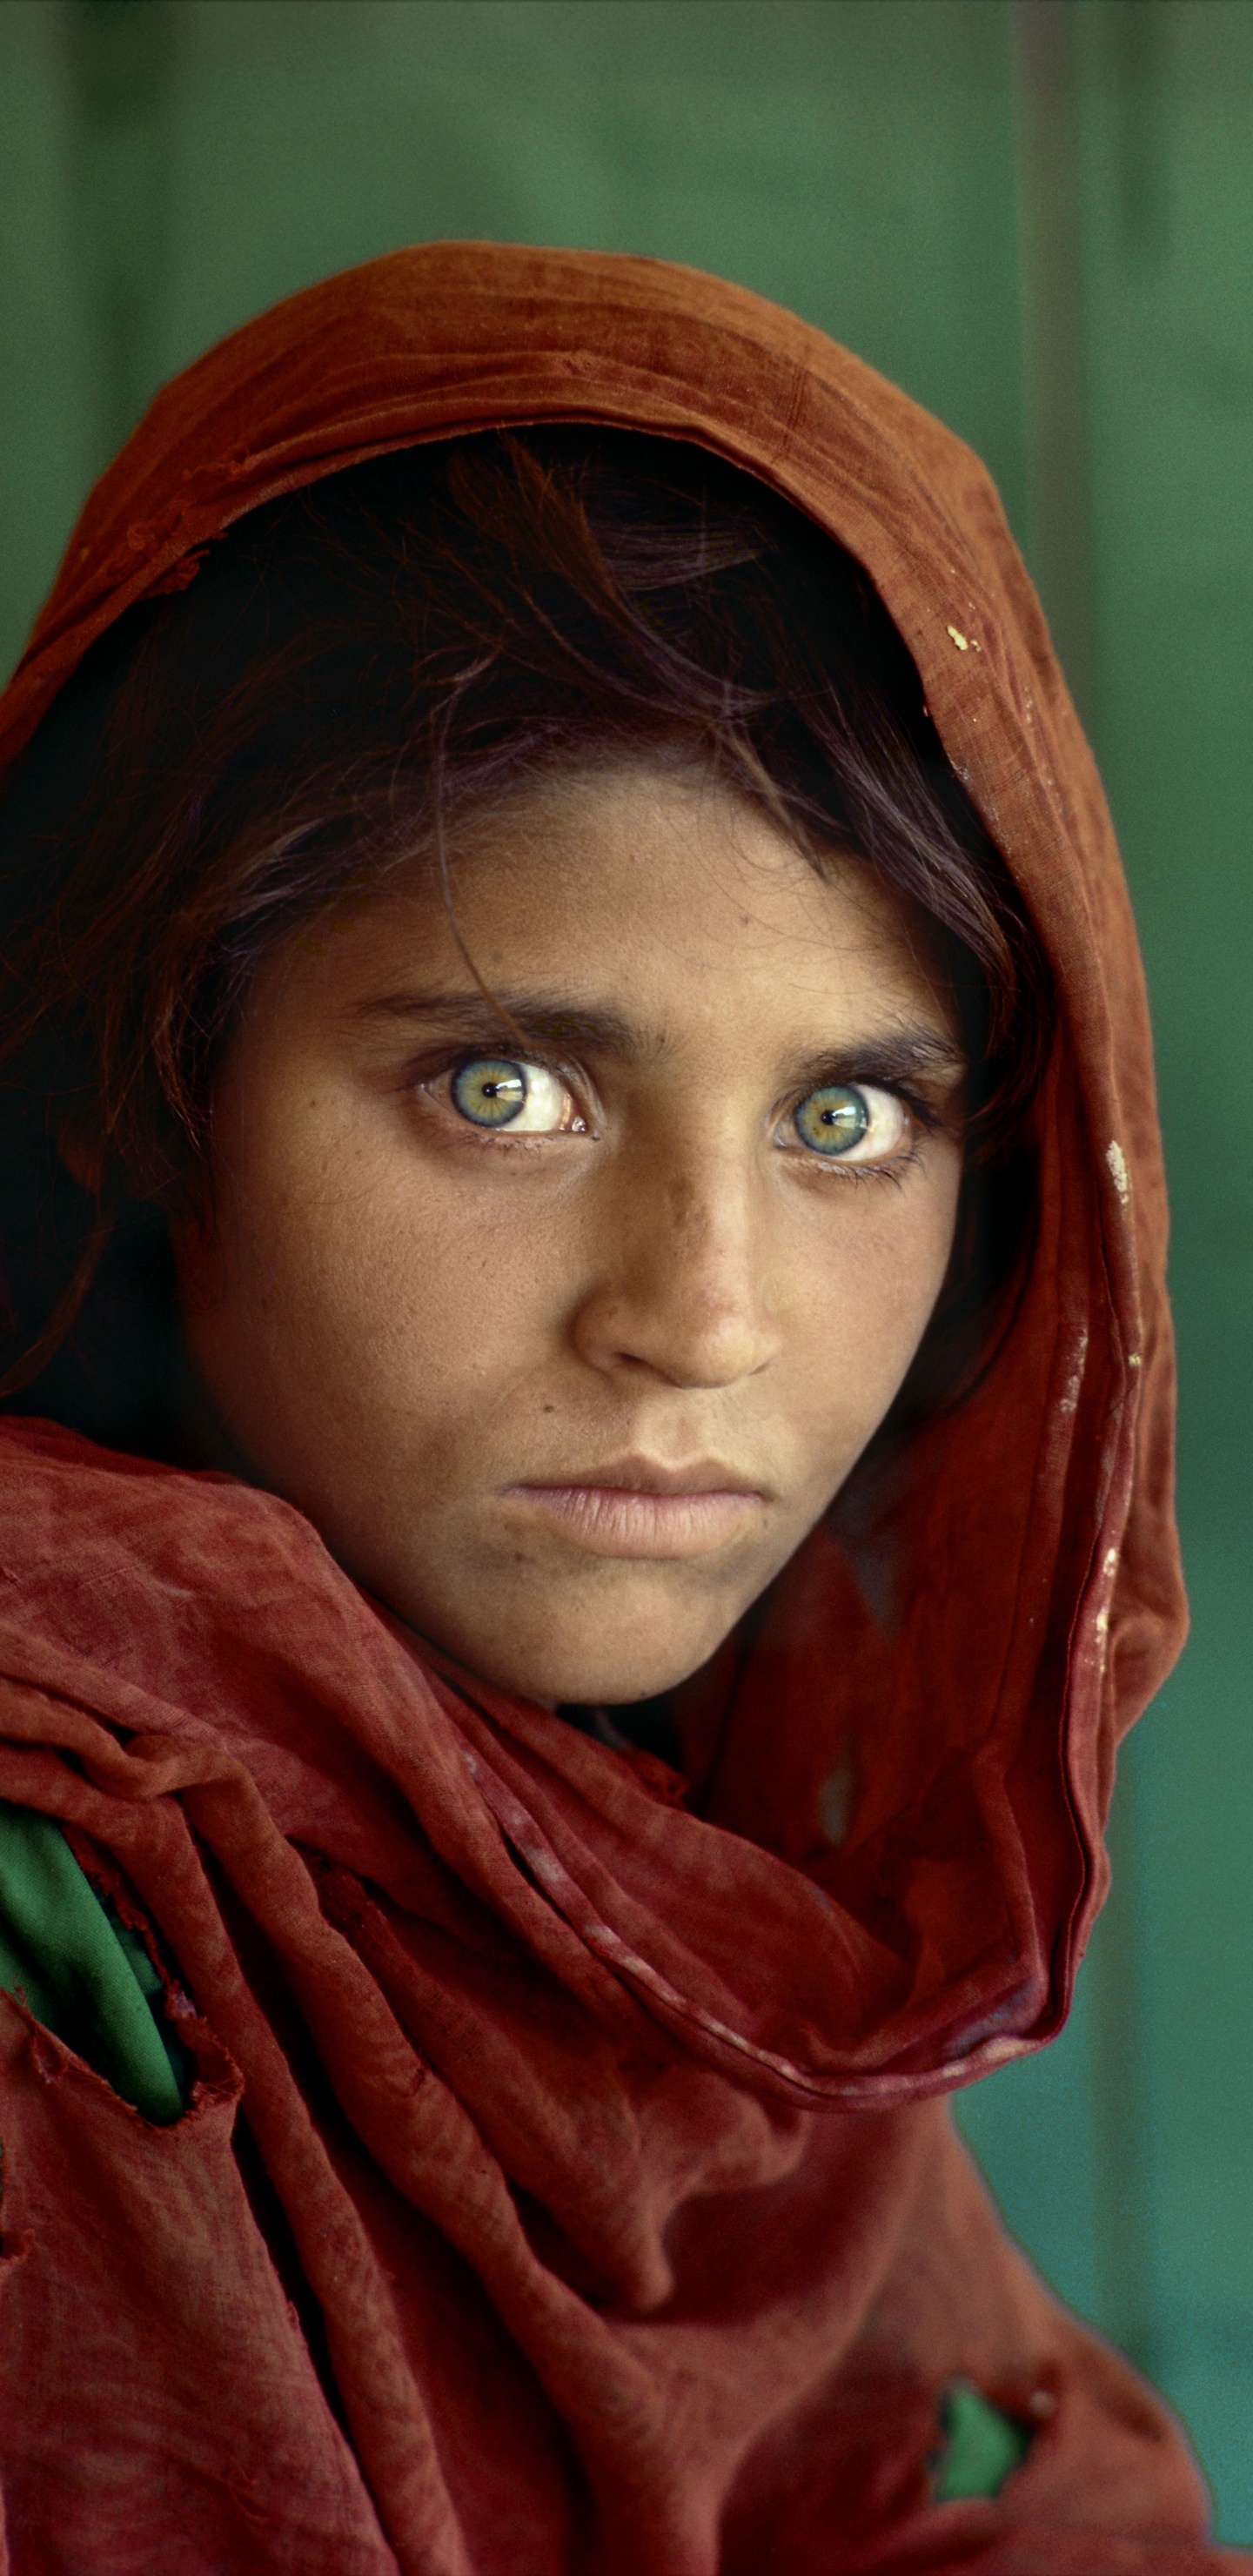 Afghanisches Mädchen, Afghanistan, National Geographic, Gesicht, Auge. Wallpaper in 1440x2960 Resolution